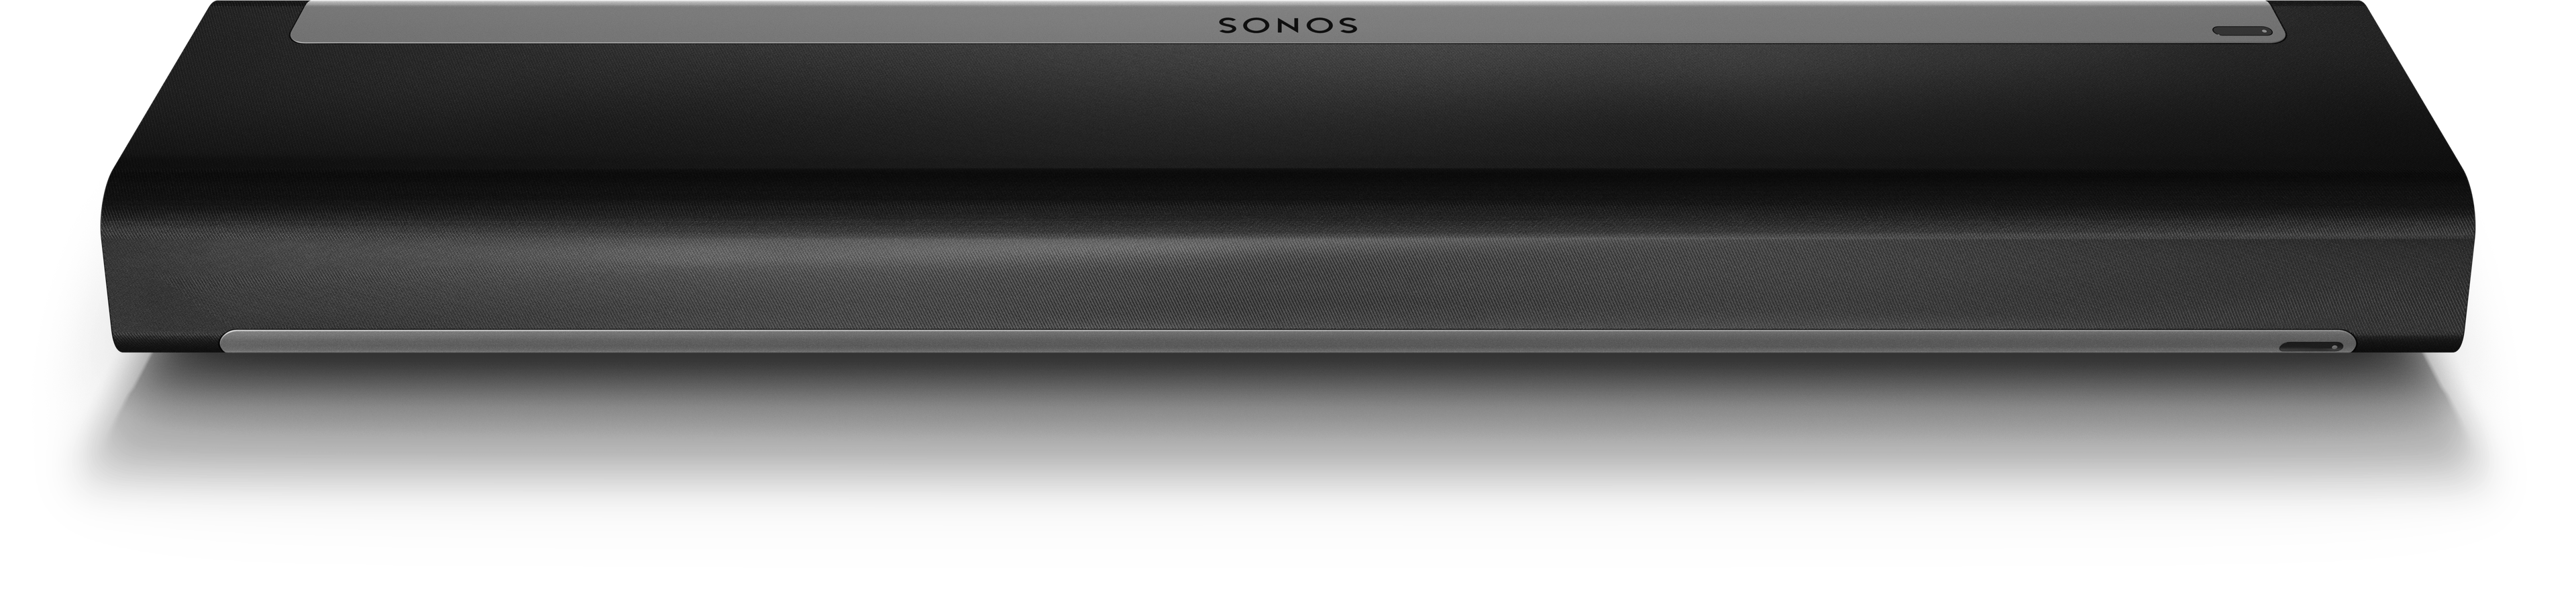 Konfigurer din Sonos | Sonos